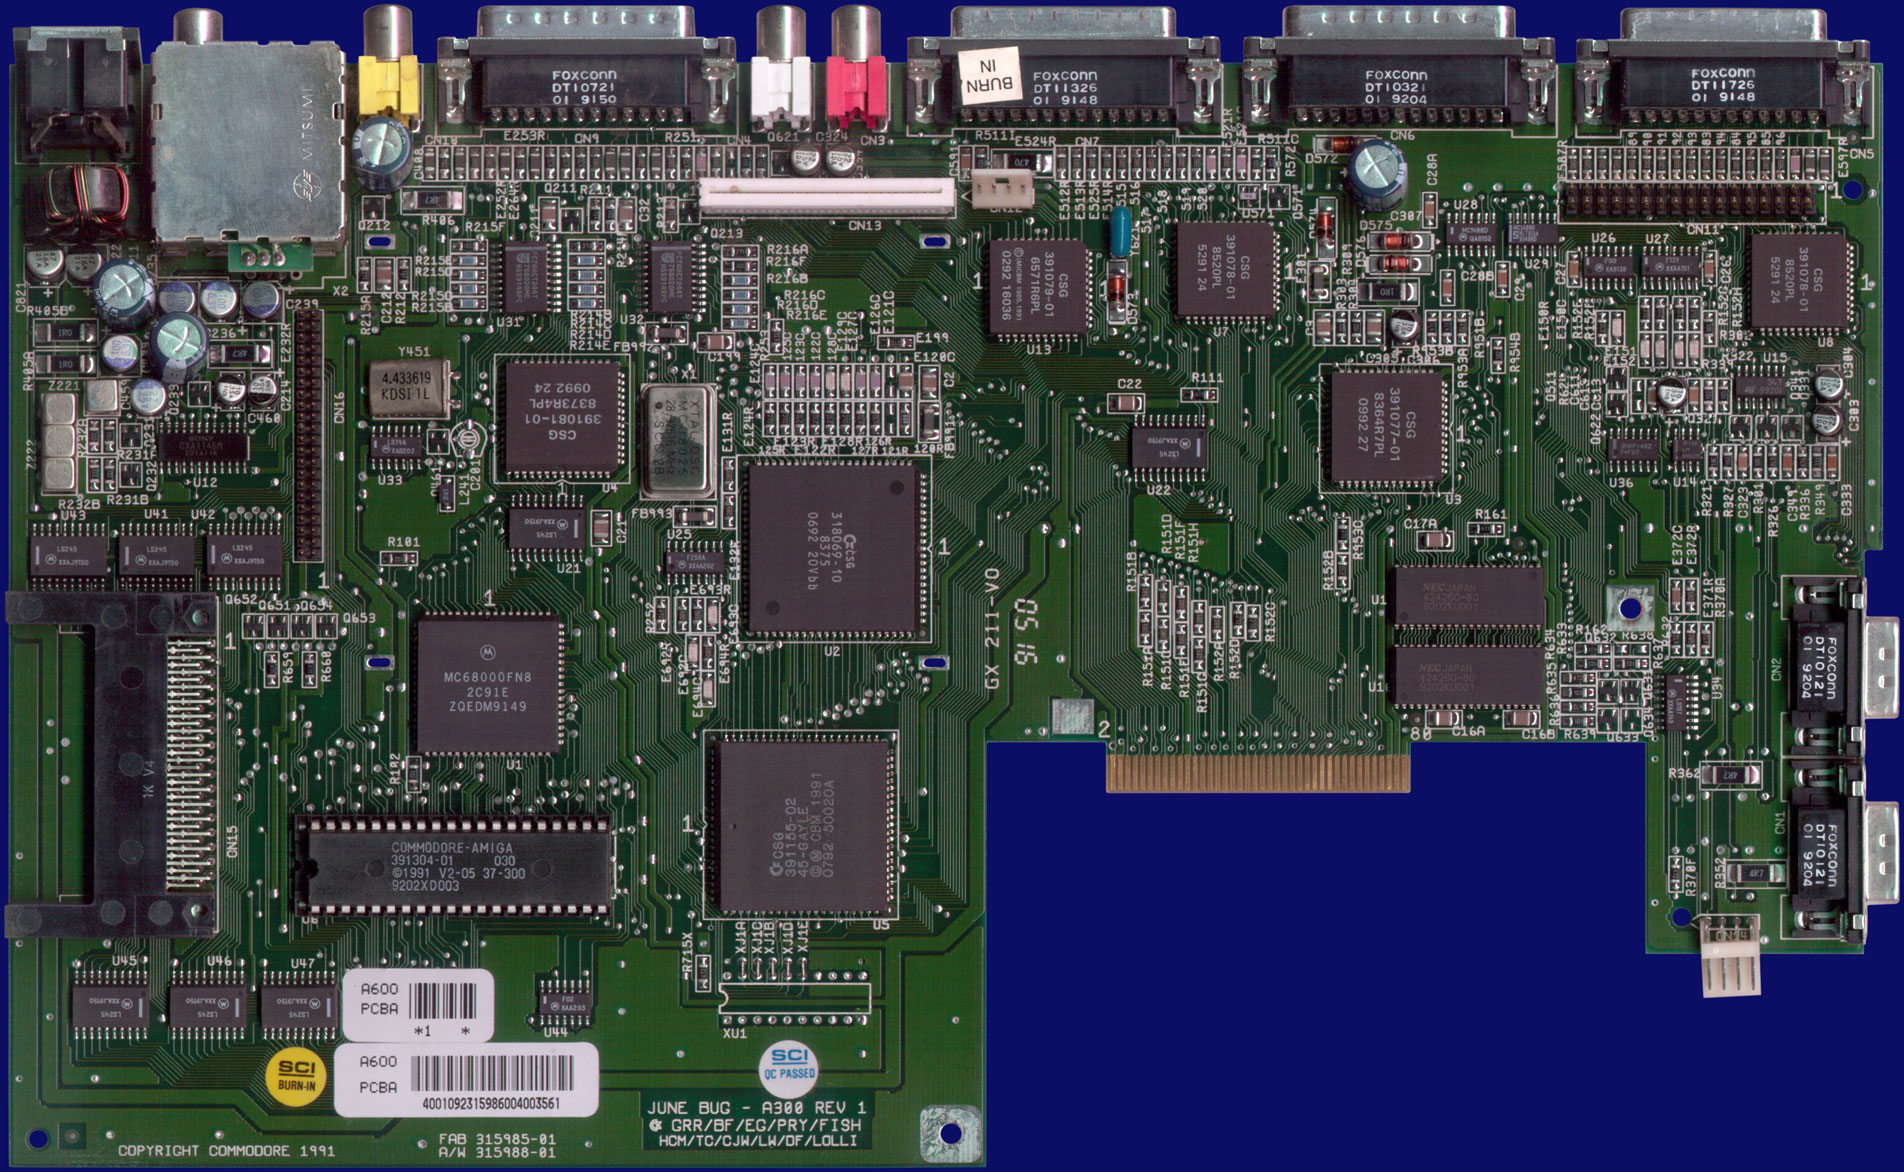 Commodore Amiga 600 - Rev 1 motherboard, front side